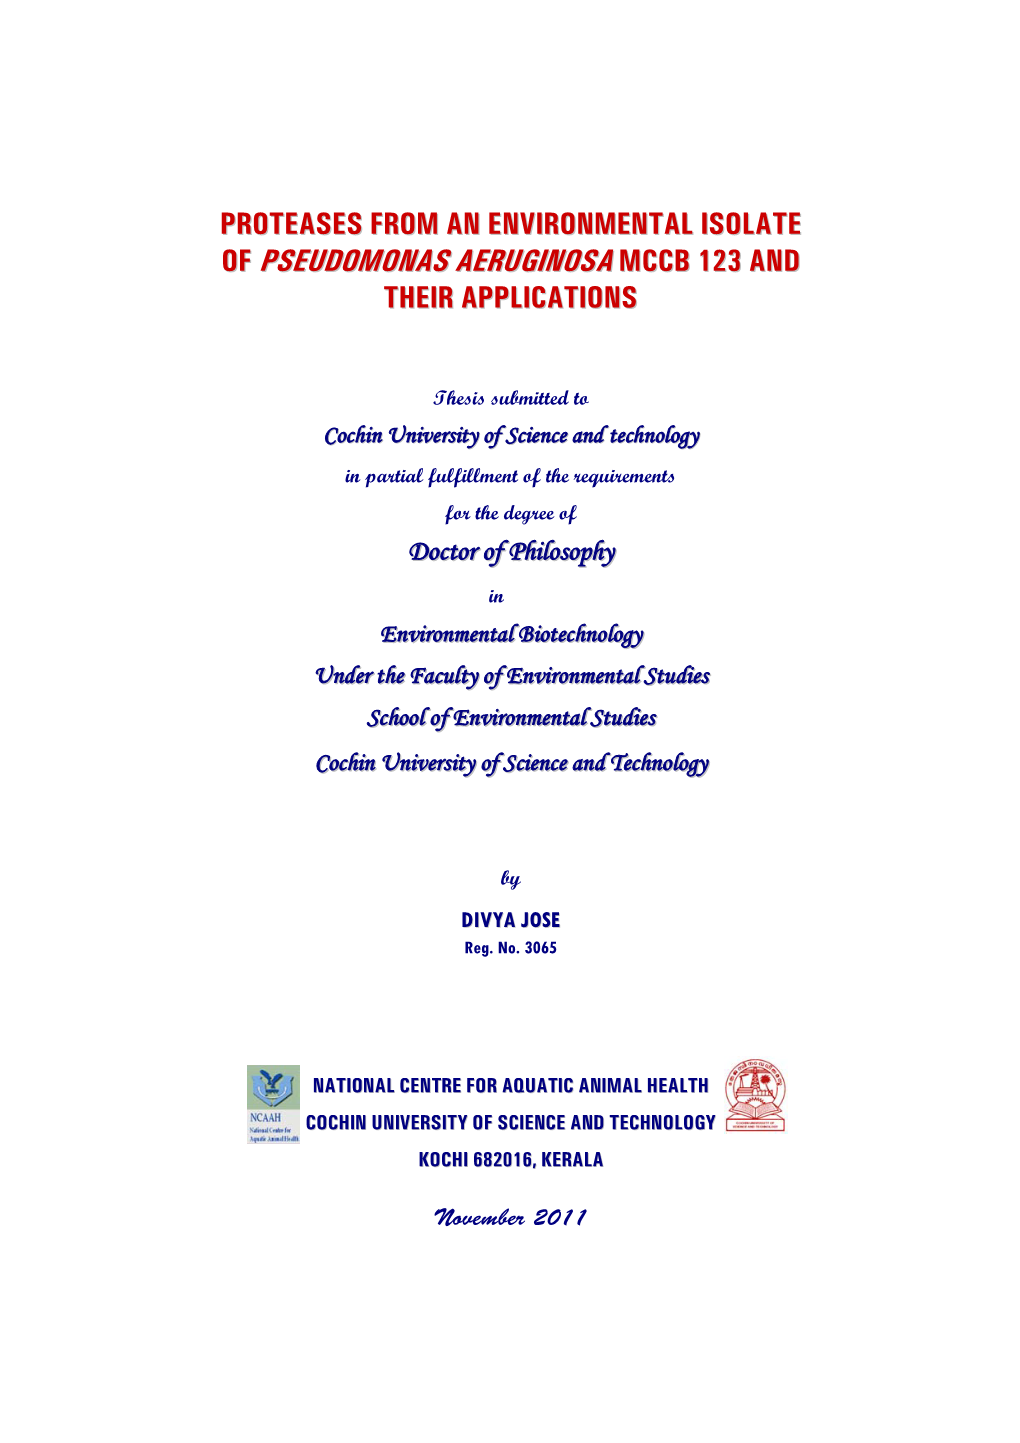 Of Pseudomonas Aeruginosa Mccb 123 and Their Applications